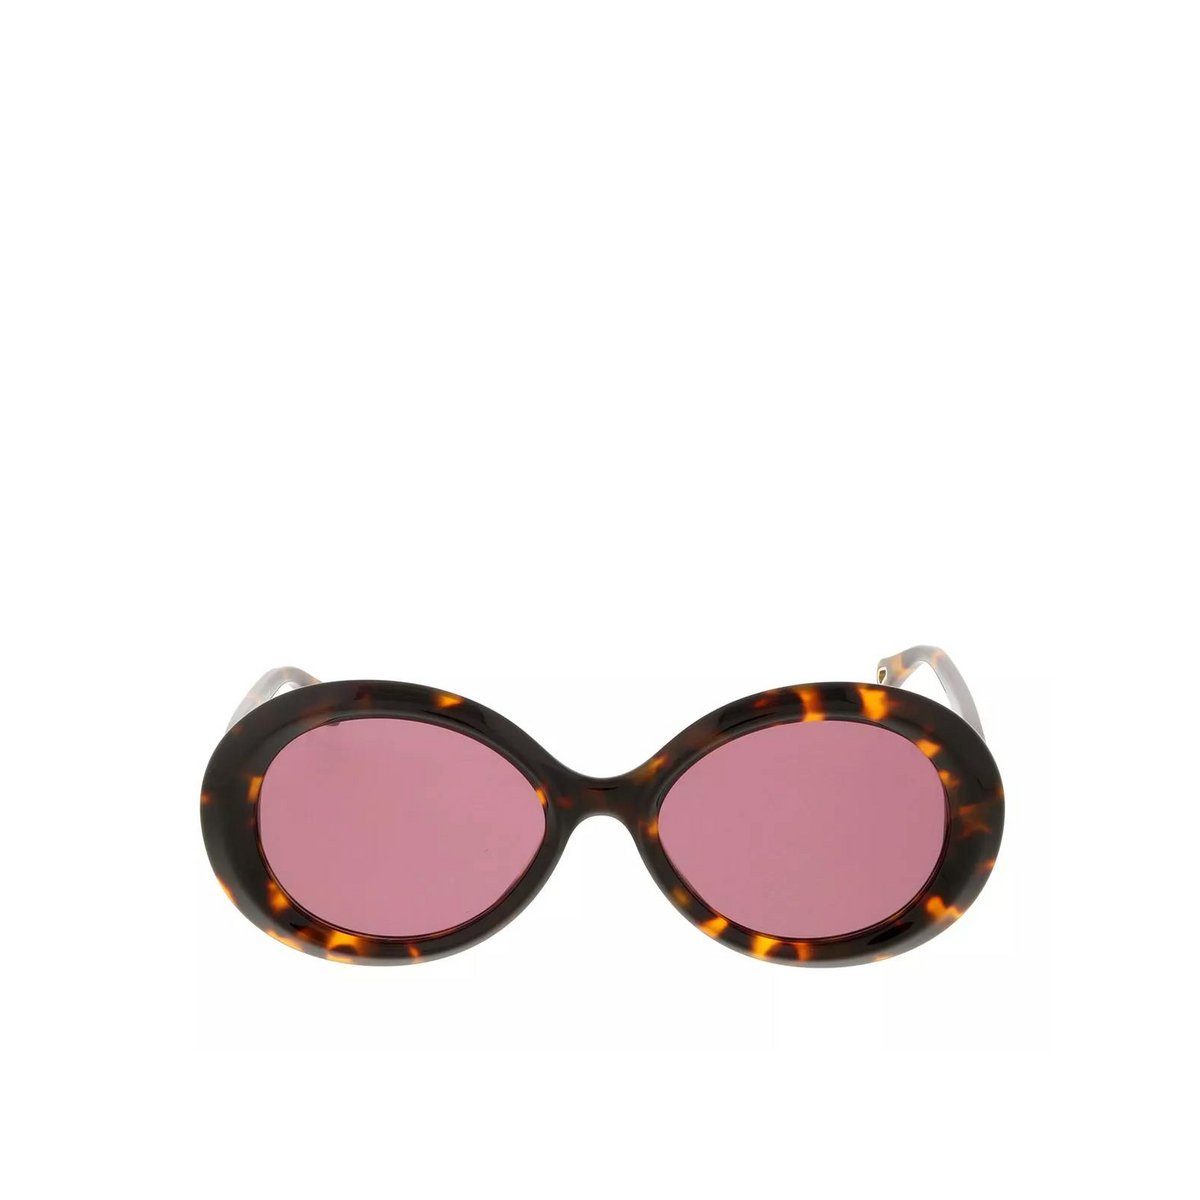 (1-St) Sonnenbrille Chloé braun